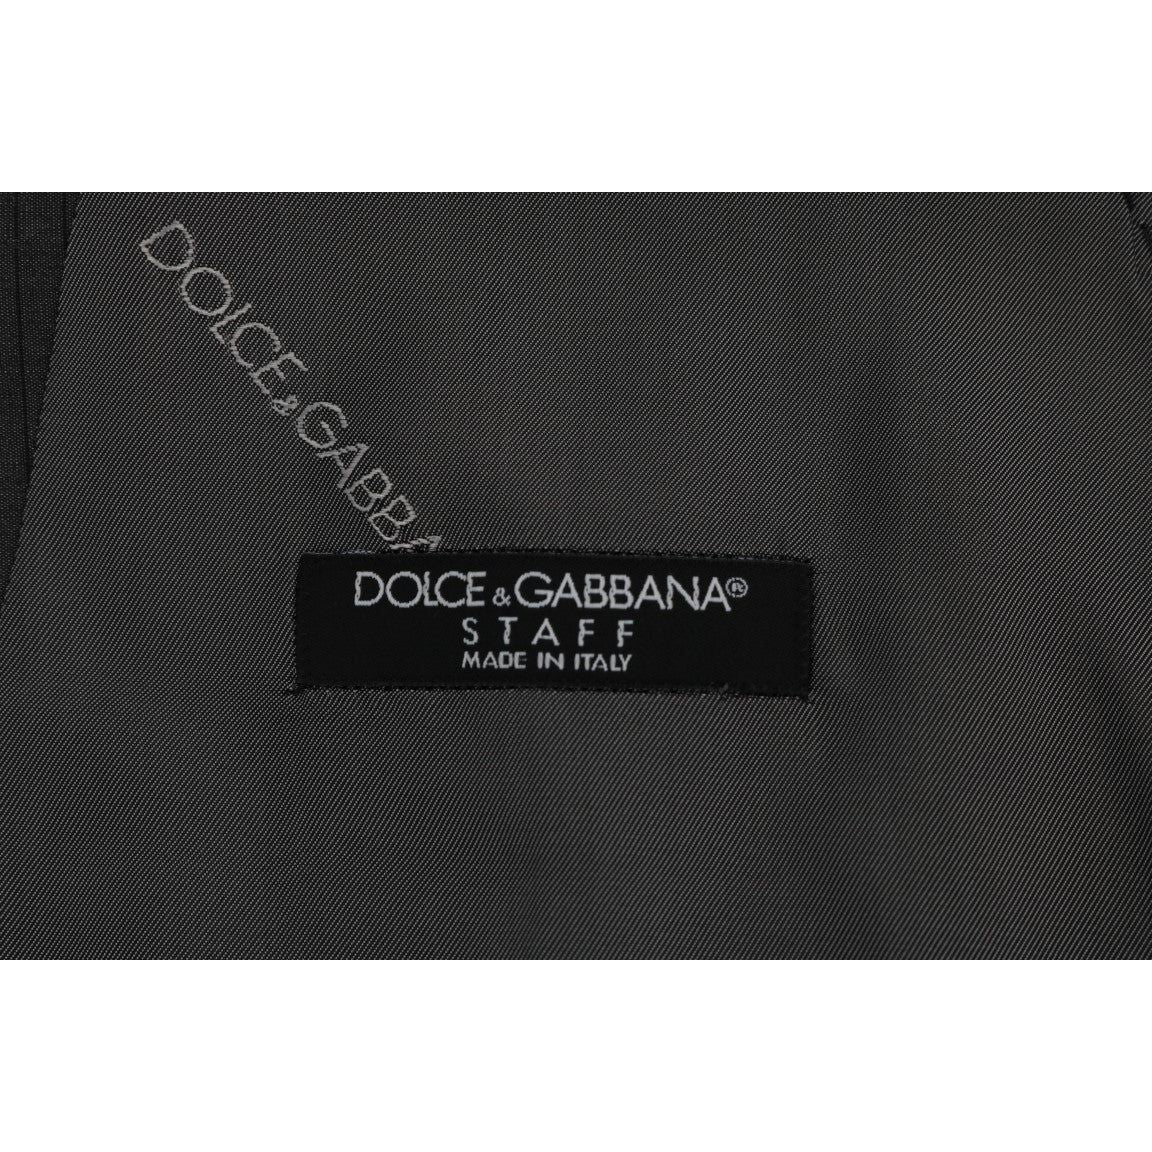 Dolce & Gabbana Sleek Gray Single-Breasted Waistcoat Vest gray-staff-cotton-rayon-vest-2